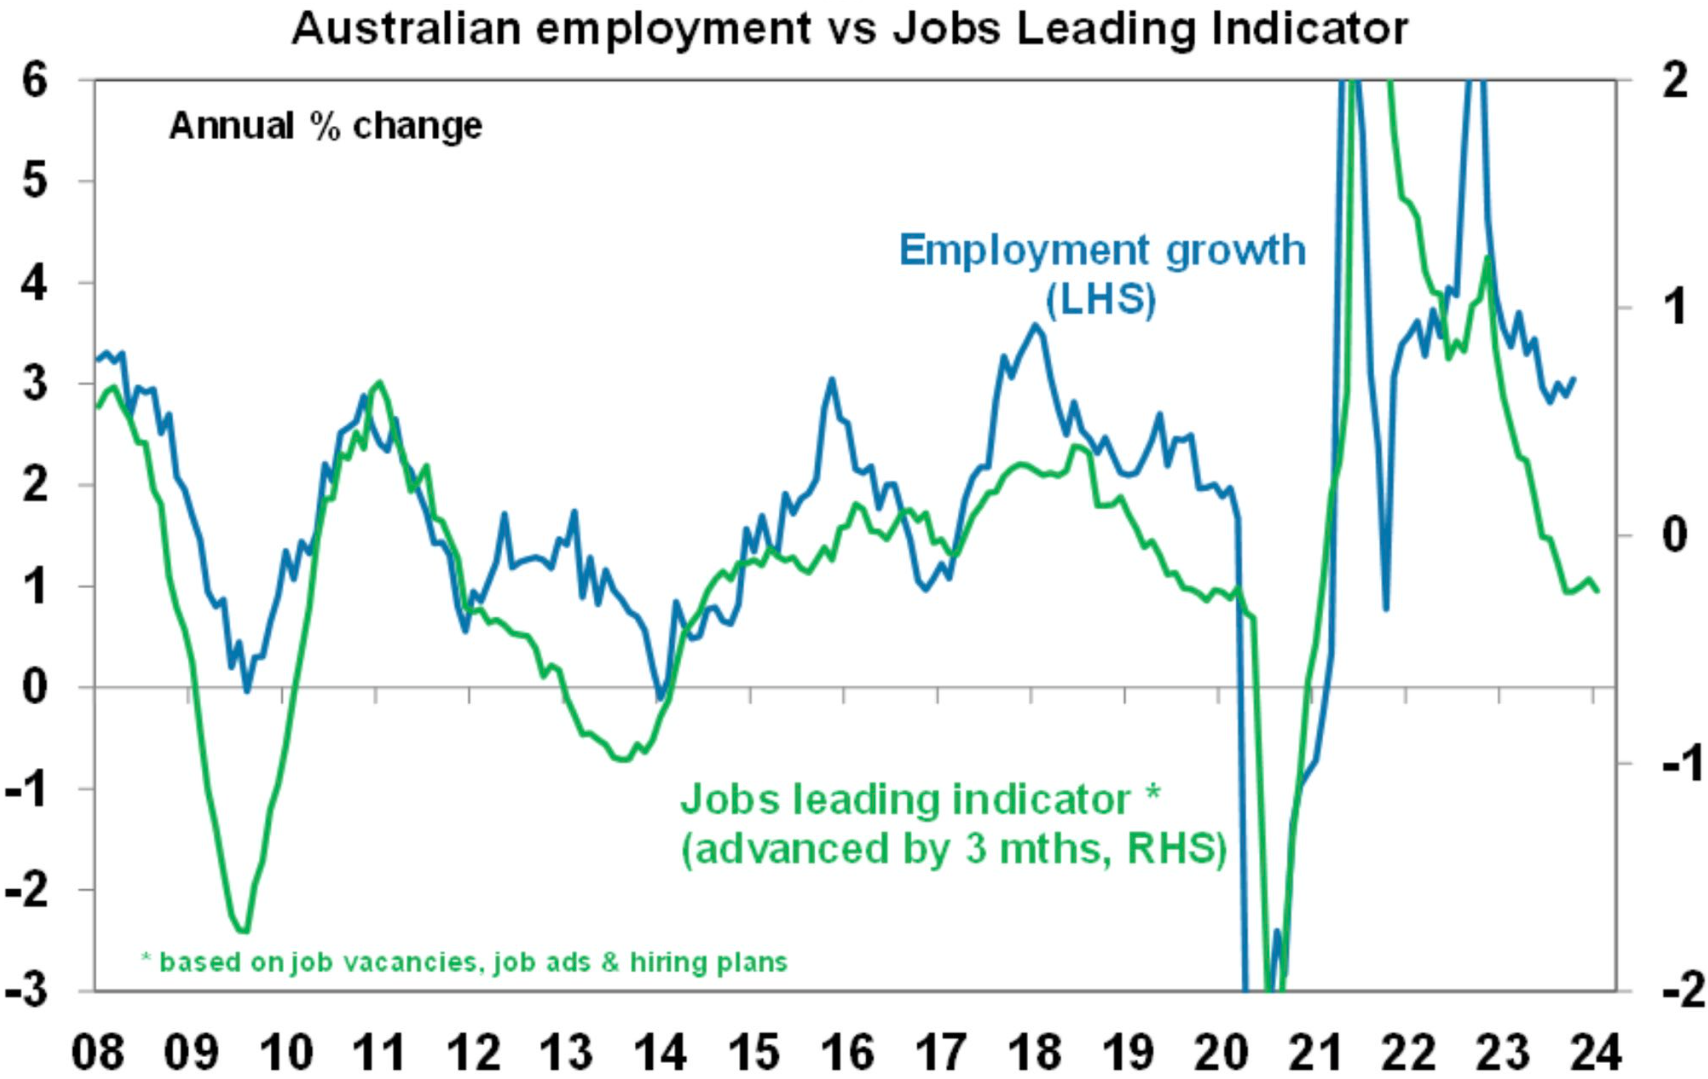 AMP leading jobs indicator